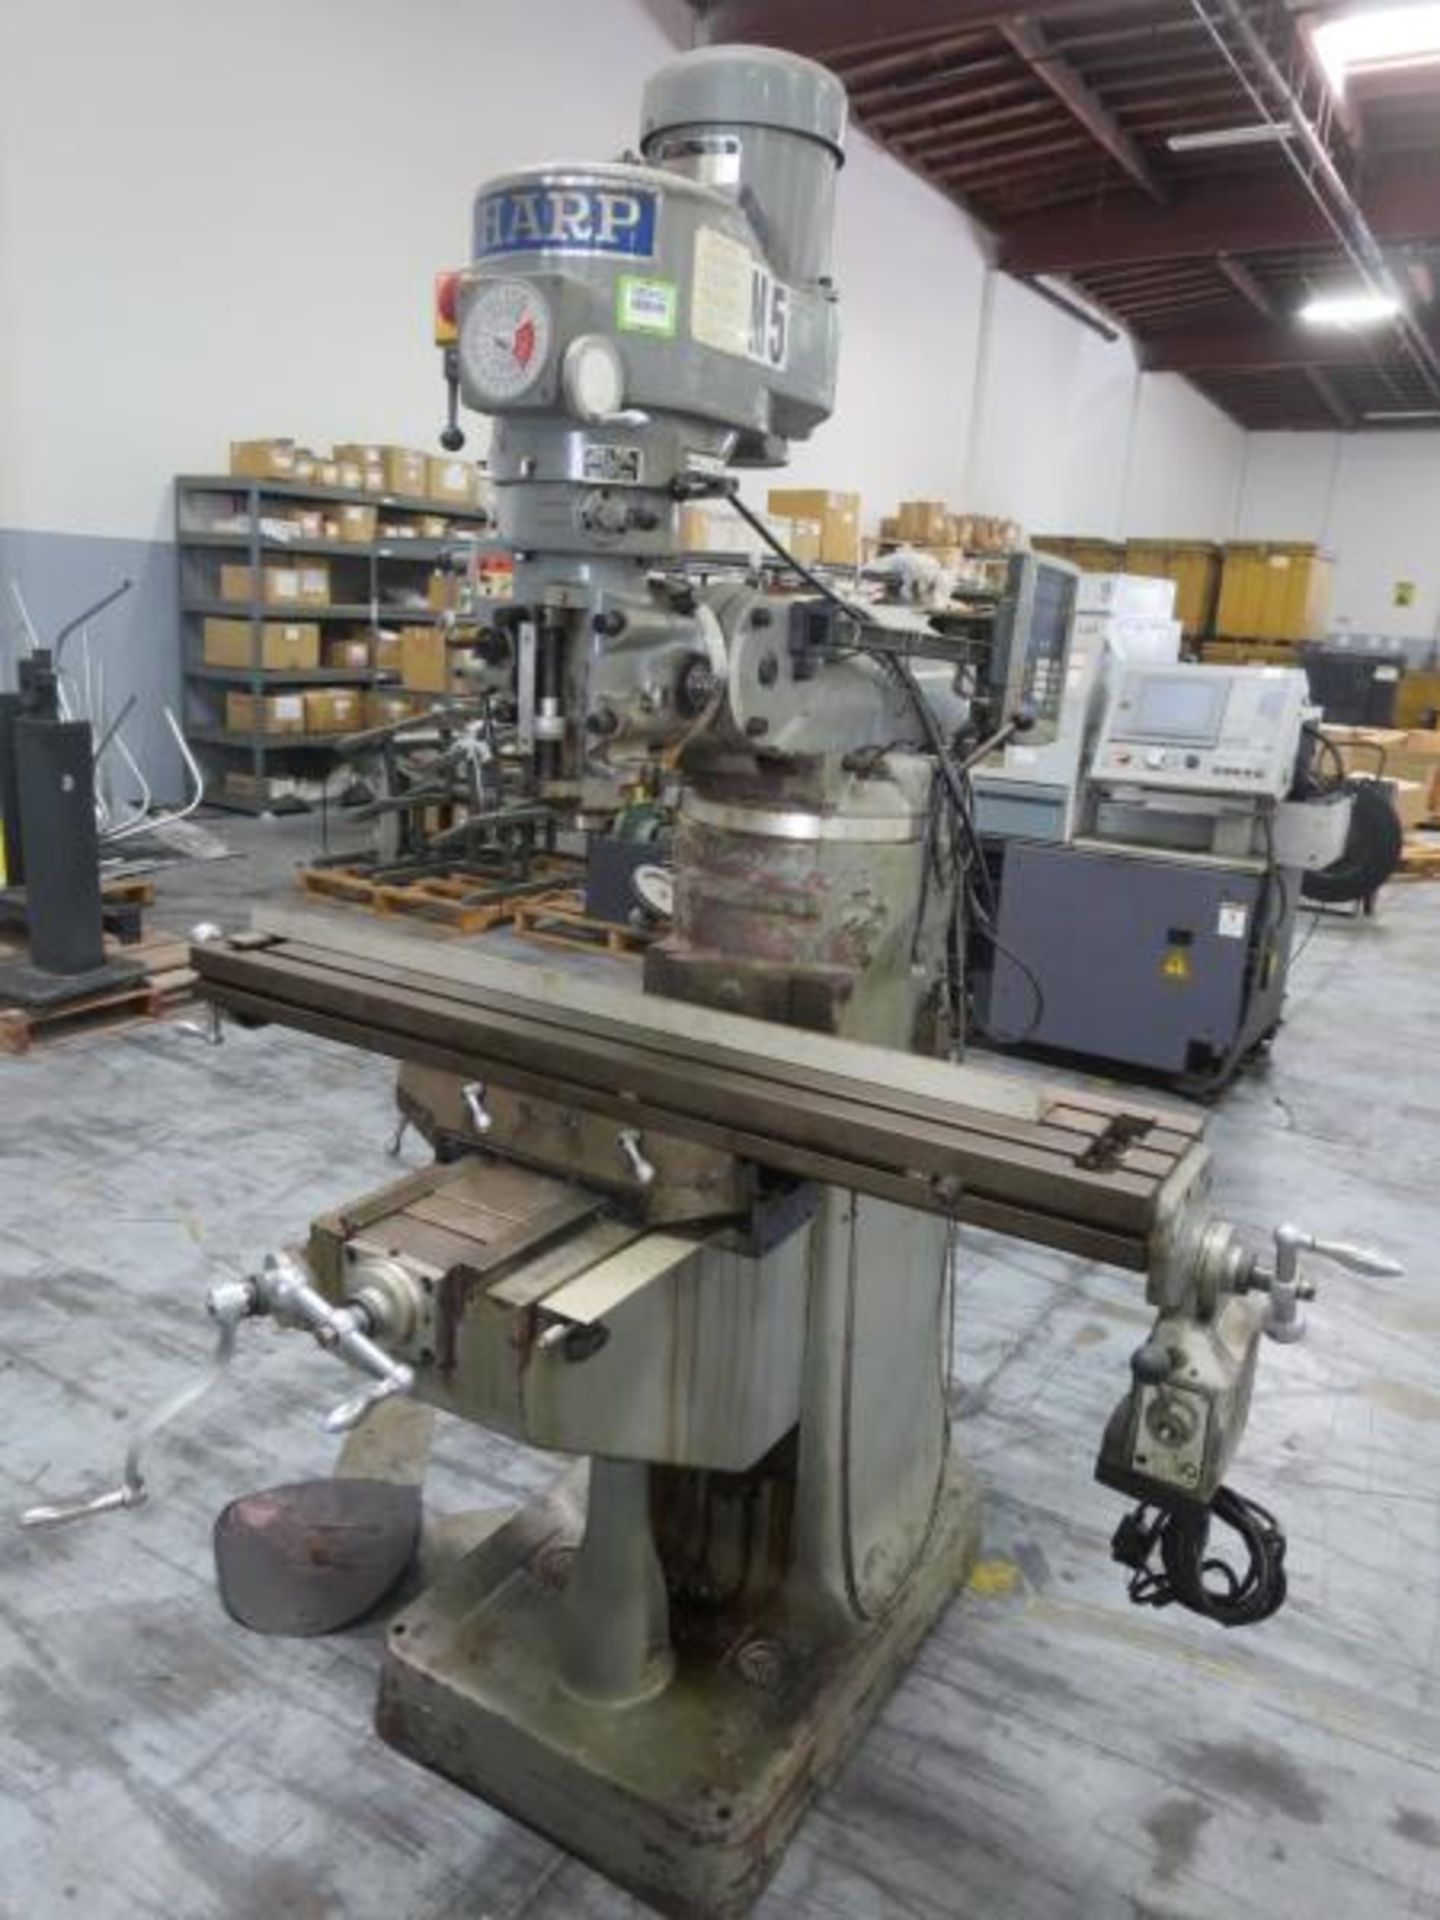 Sharp LA-56 Vertical Mill, 3 axis, 9" x 50" feed table, 90° Rotating Head, 40° Tilting head,